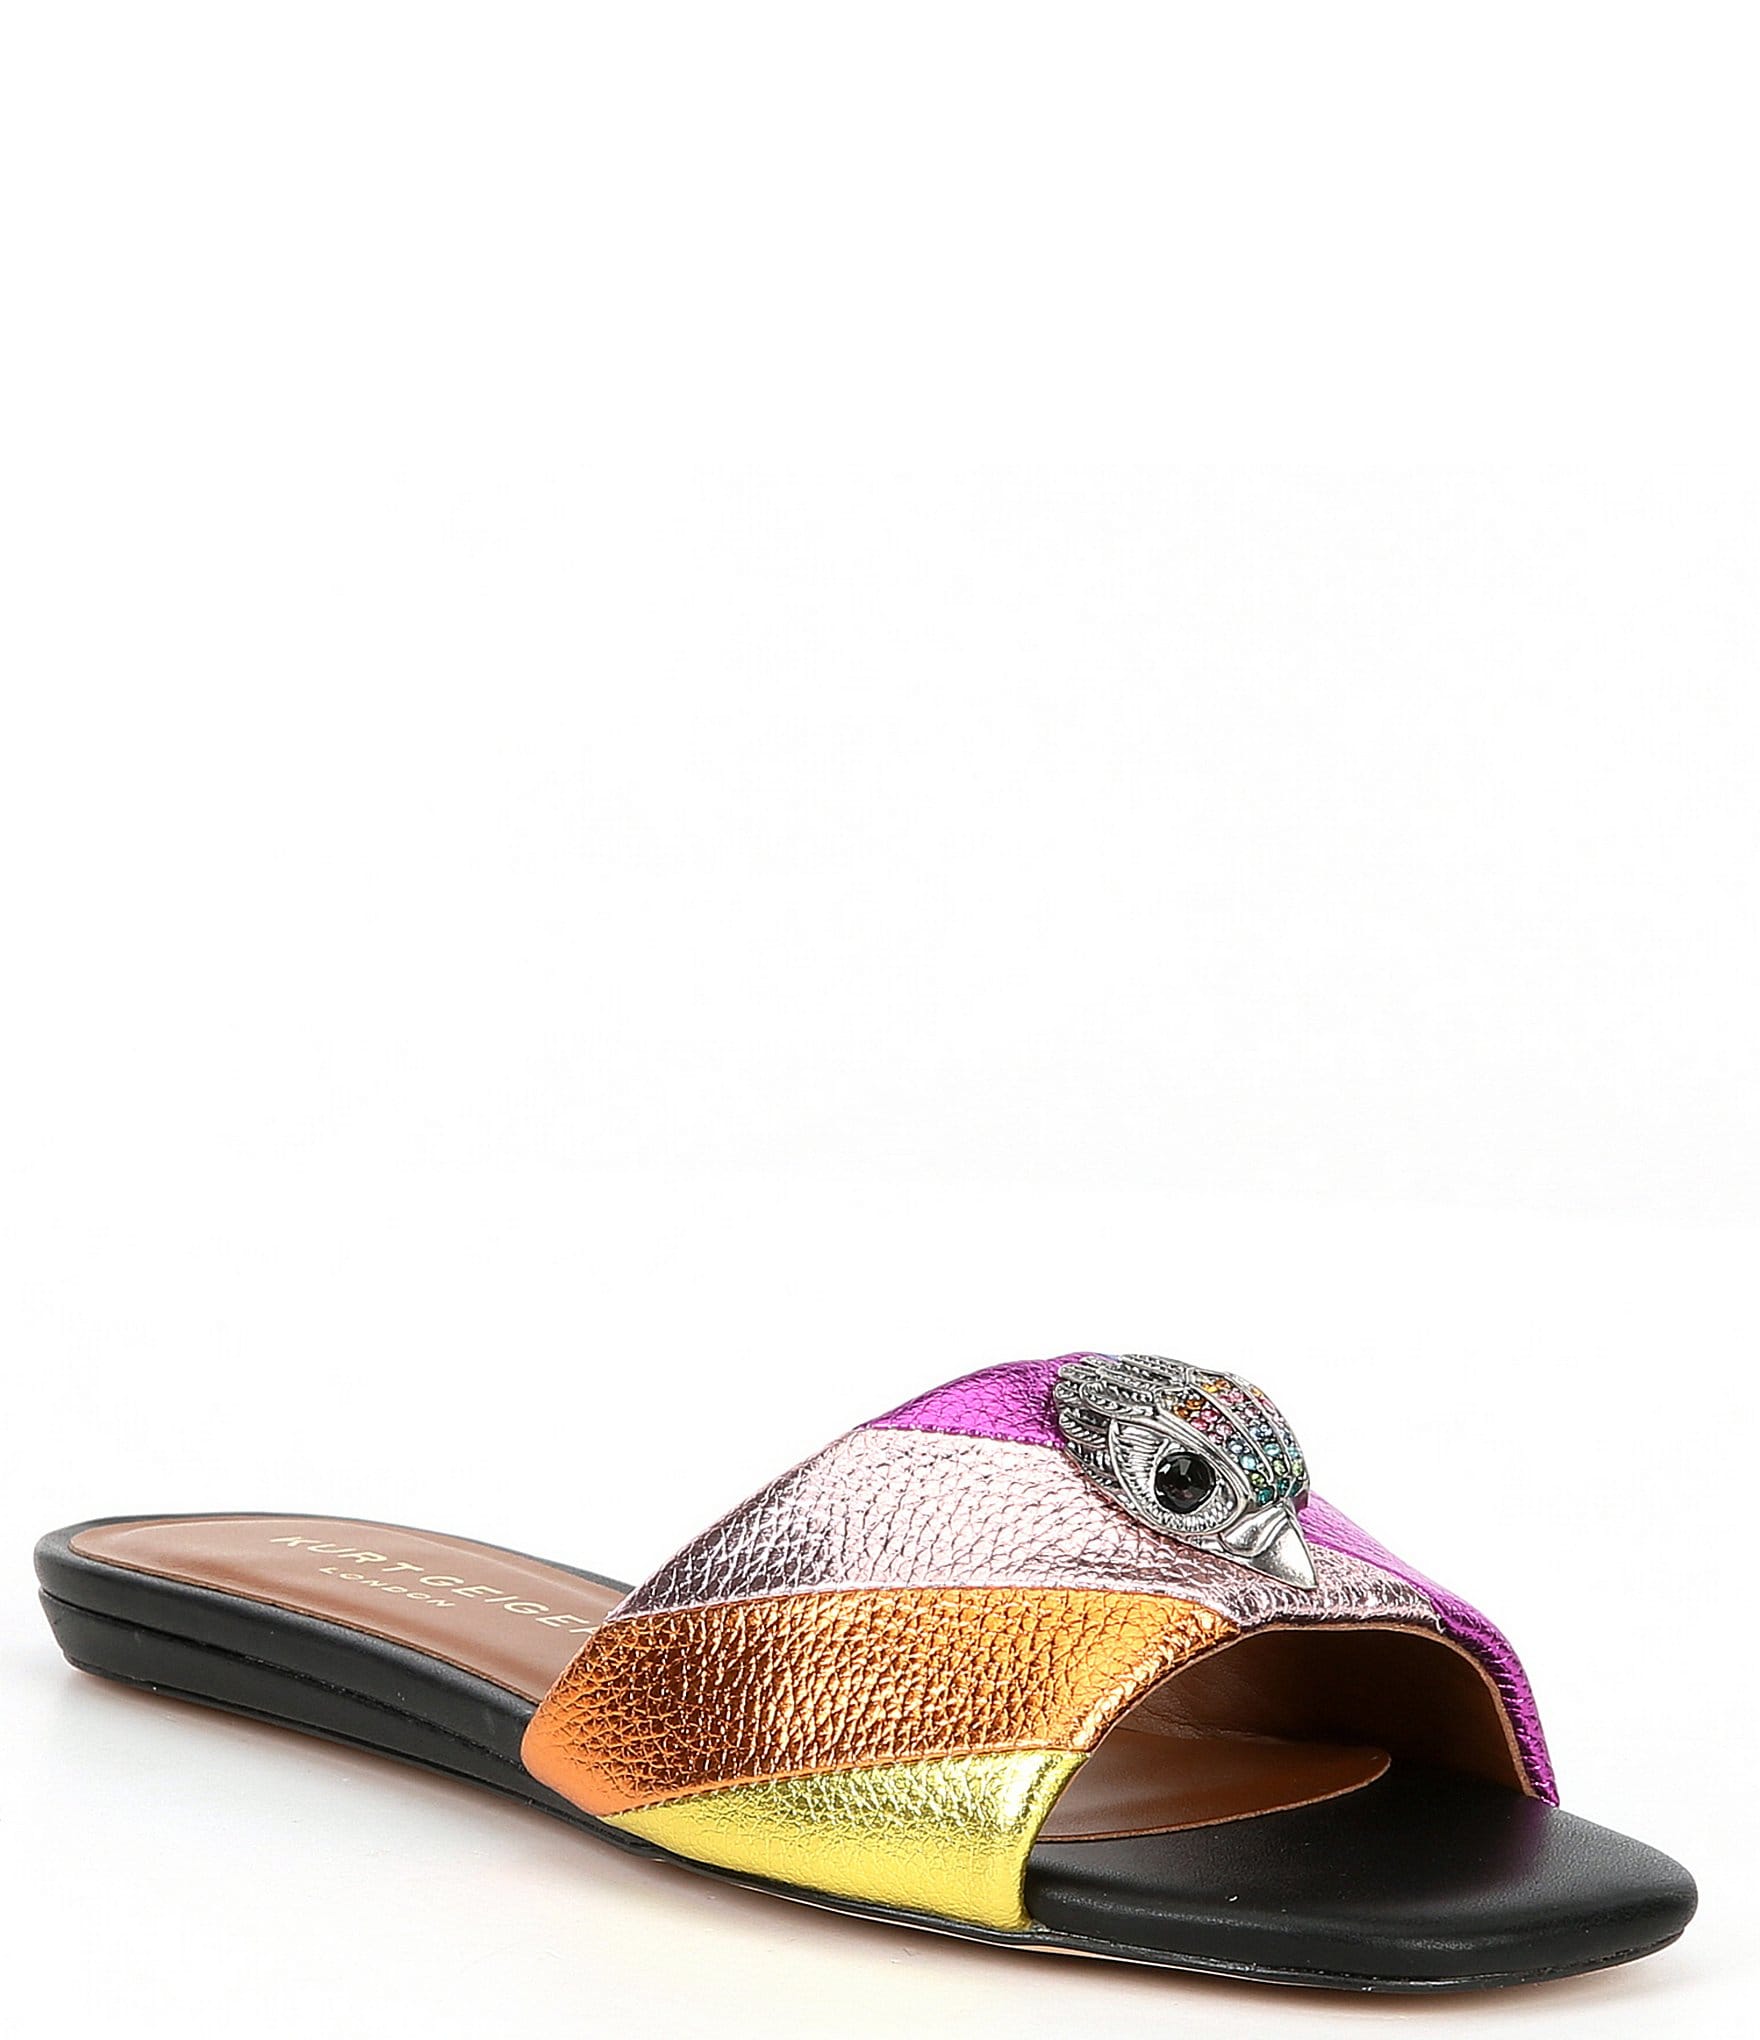 Kurt Geiger London Womens Shore Ditch Leather Wedge Sandals Shoes BHFO 5689  | eBay